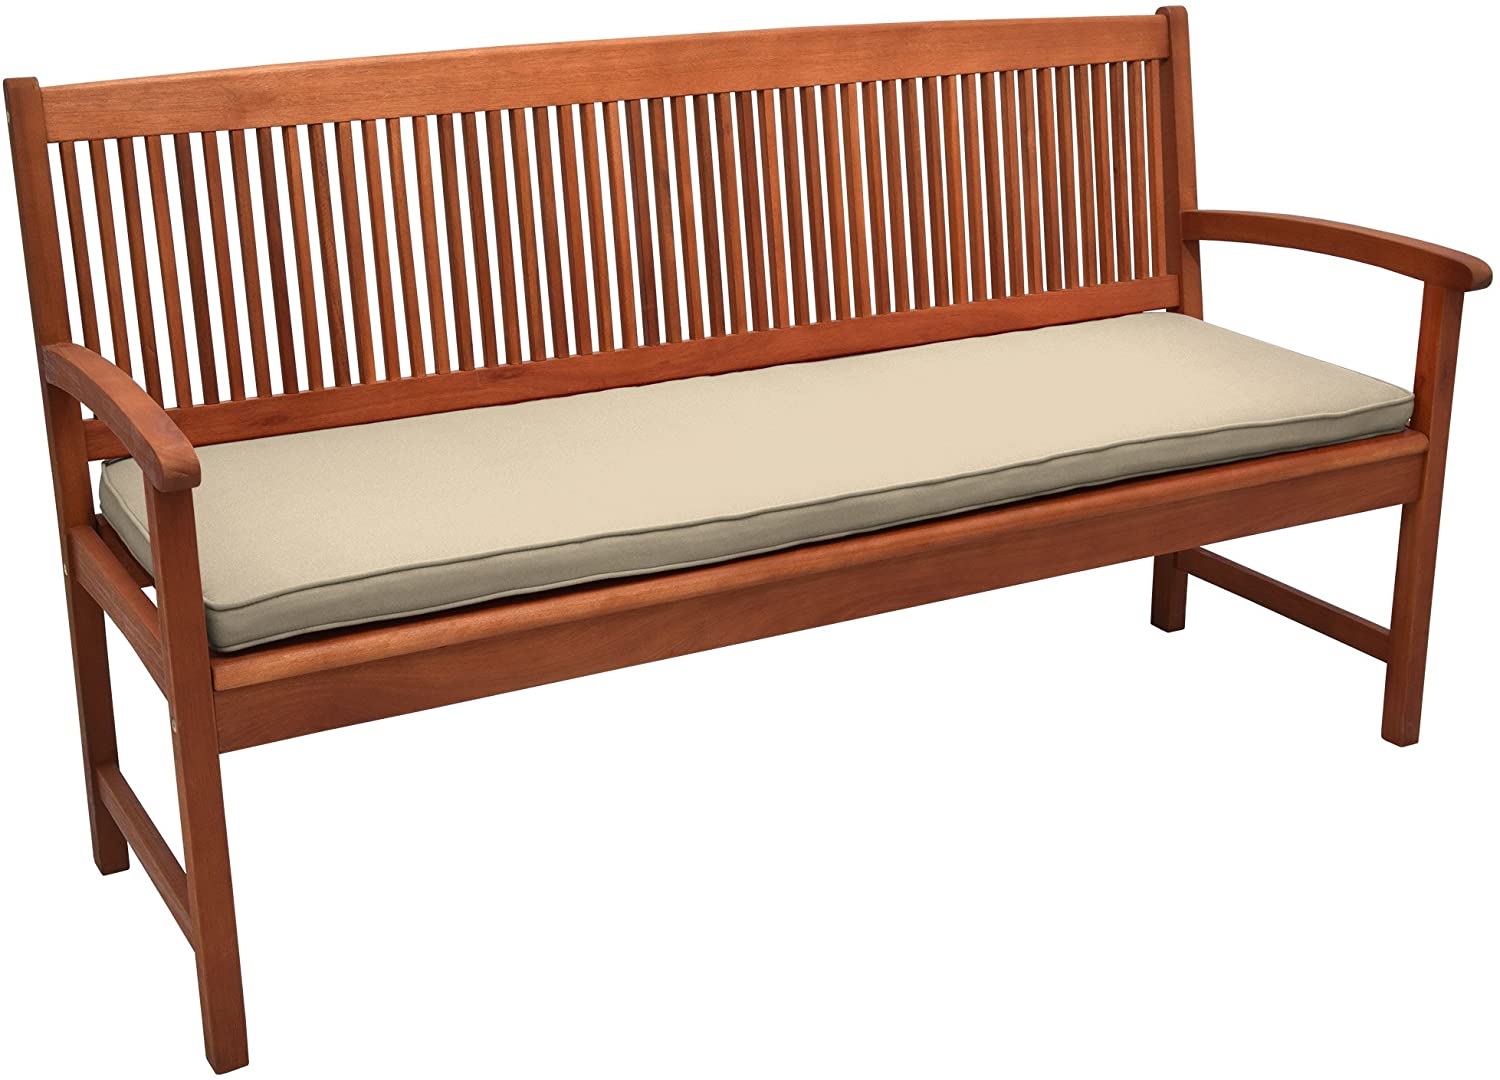 Beautissu Bench Cushion Base Bk, Comfortable Cushion For Garden Bench With 